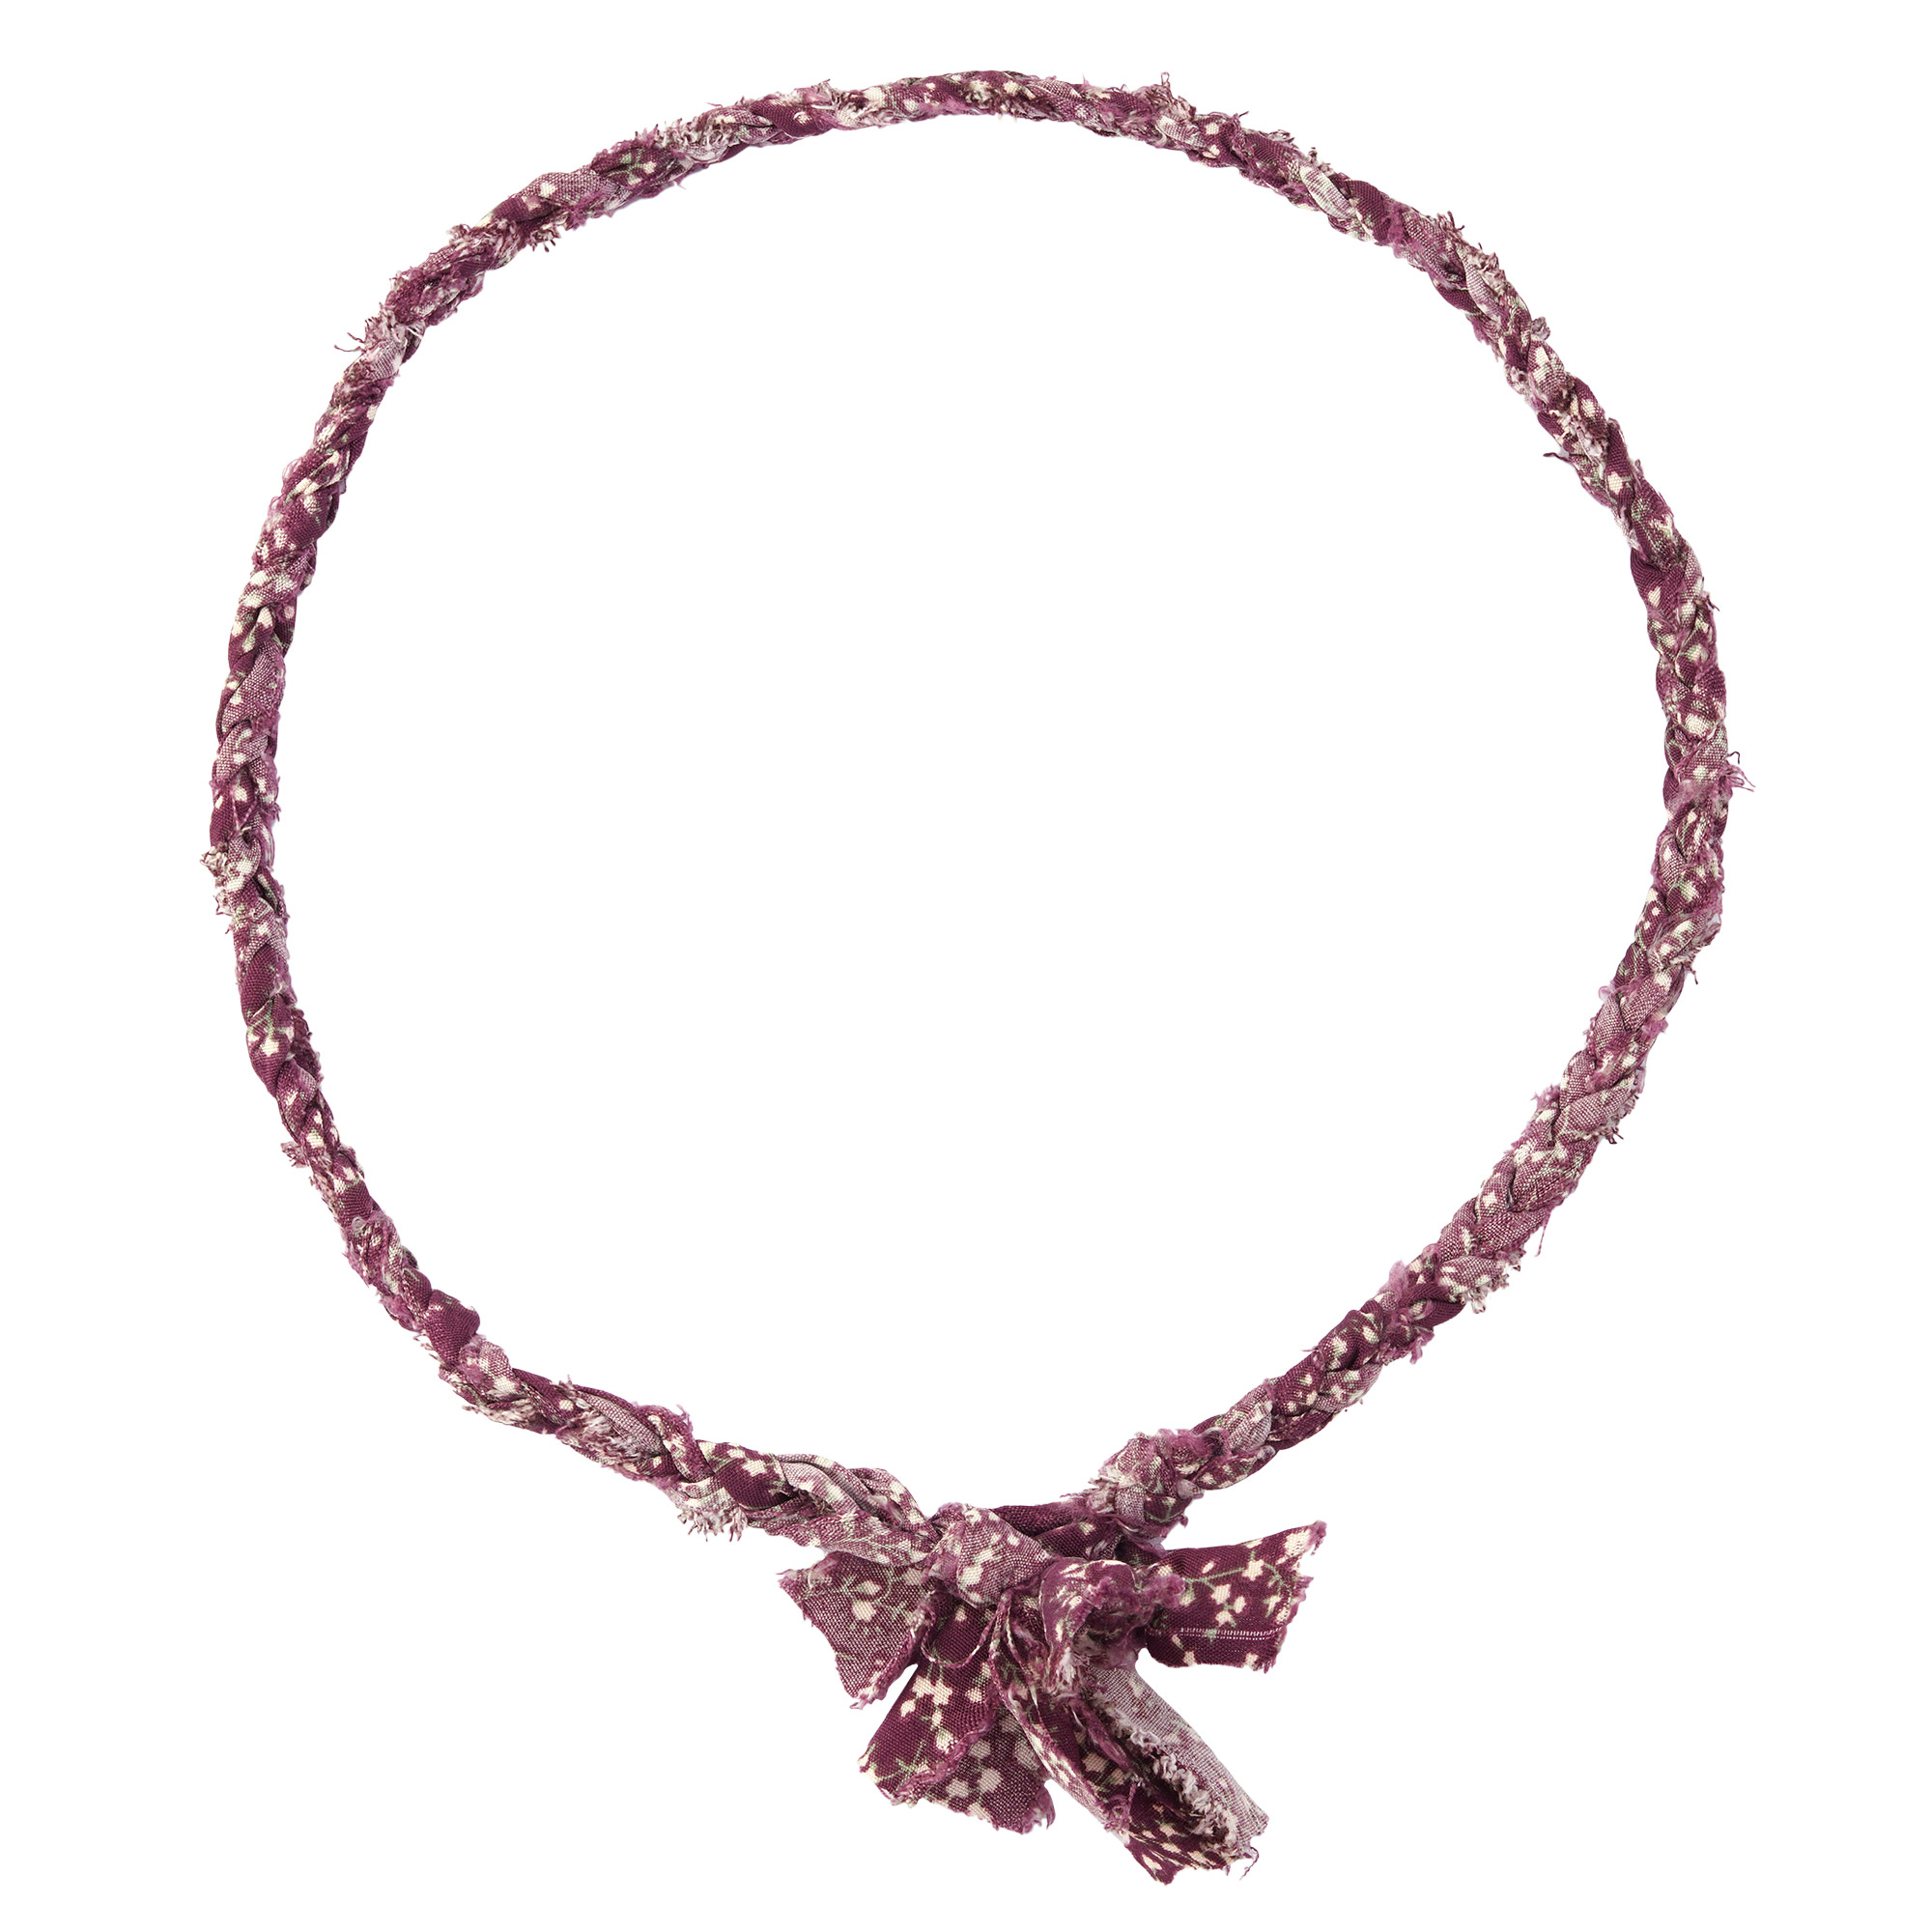 Necklace frayed fabric